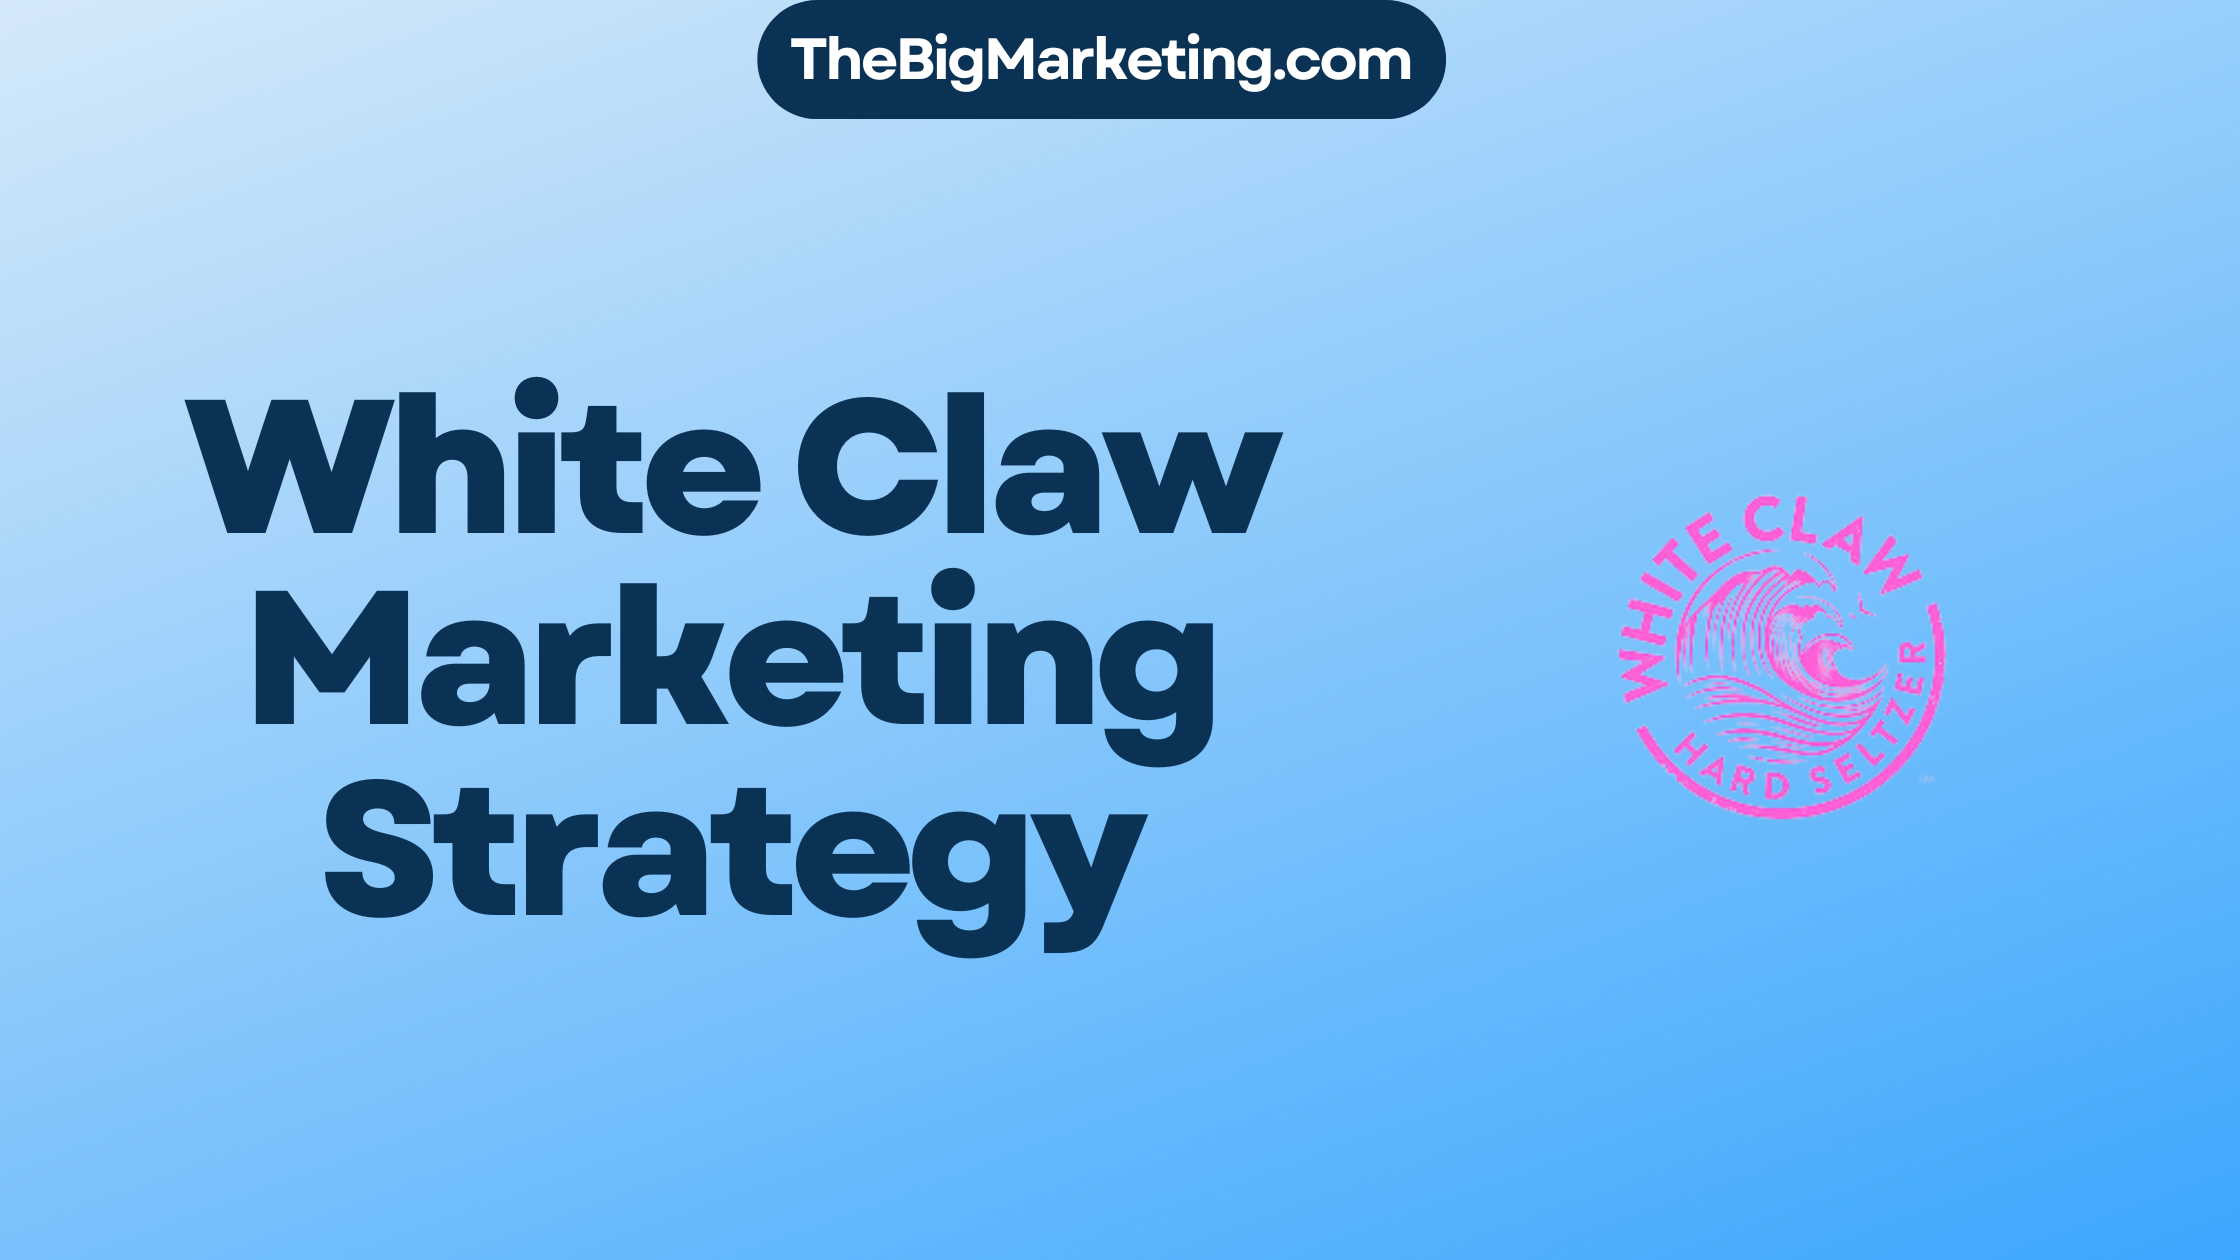 White Claw Marketing Strategy